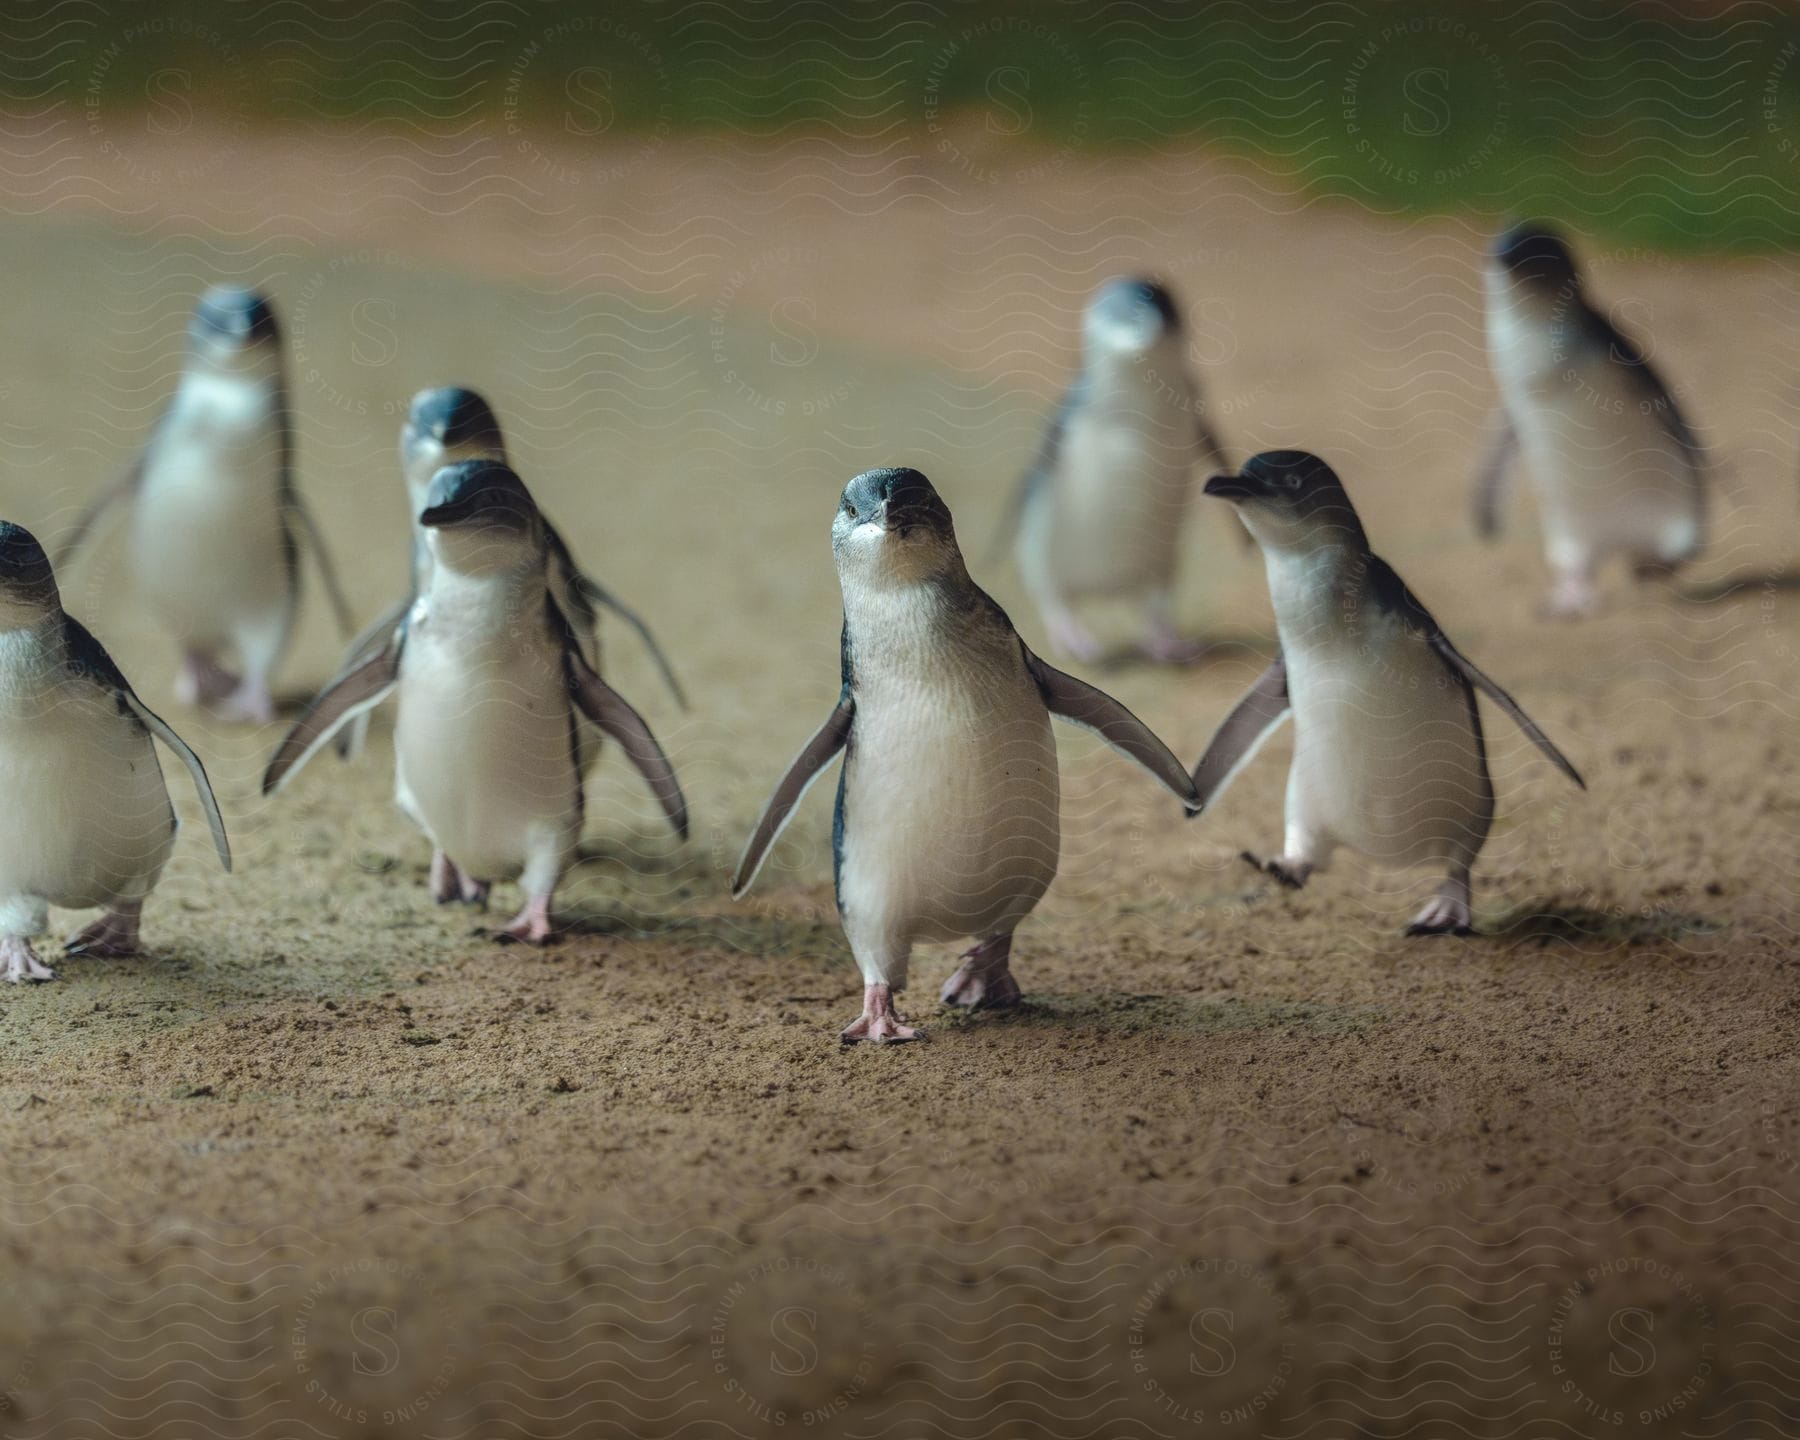 Group of little penguins walking on sandy ground.